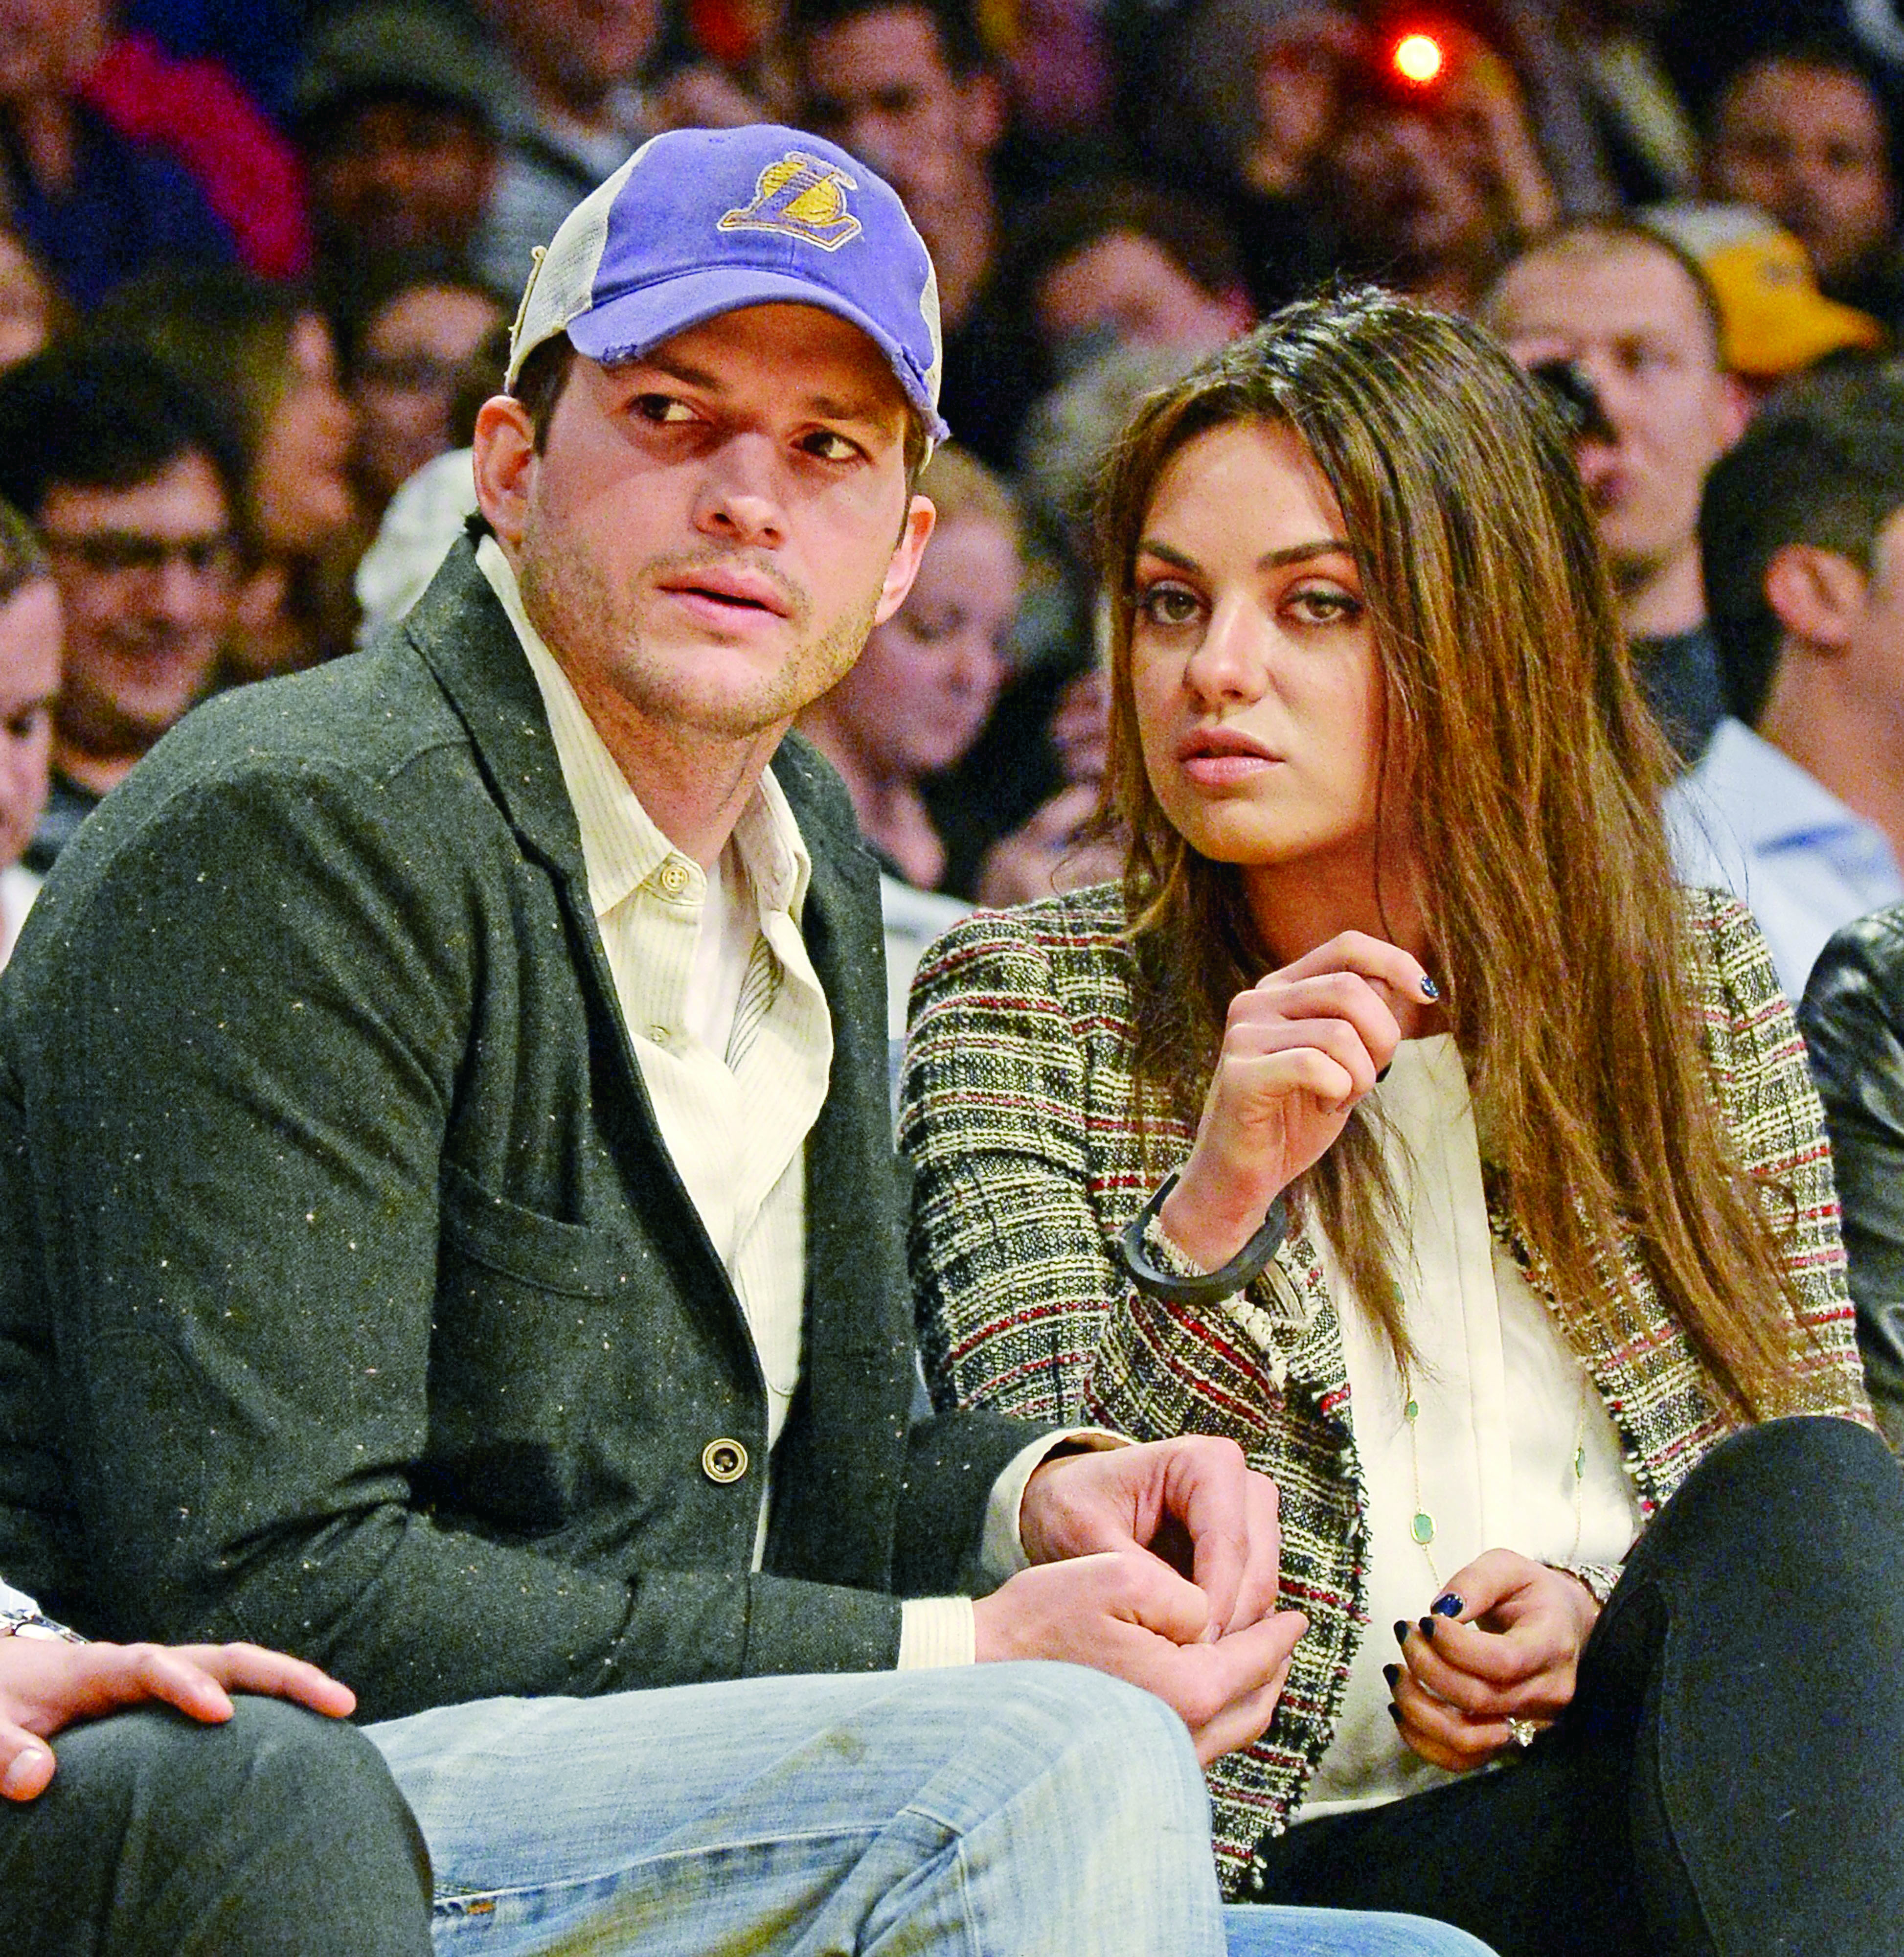 Ashton Kutcher y Mila Kunis ya son marido y mujer